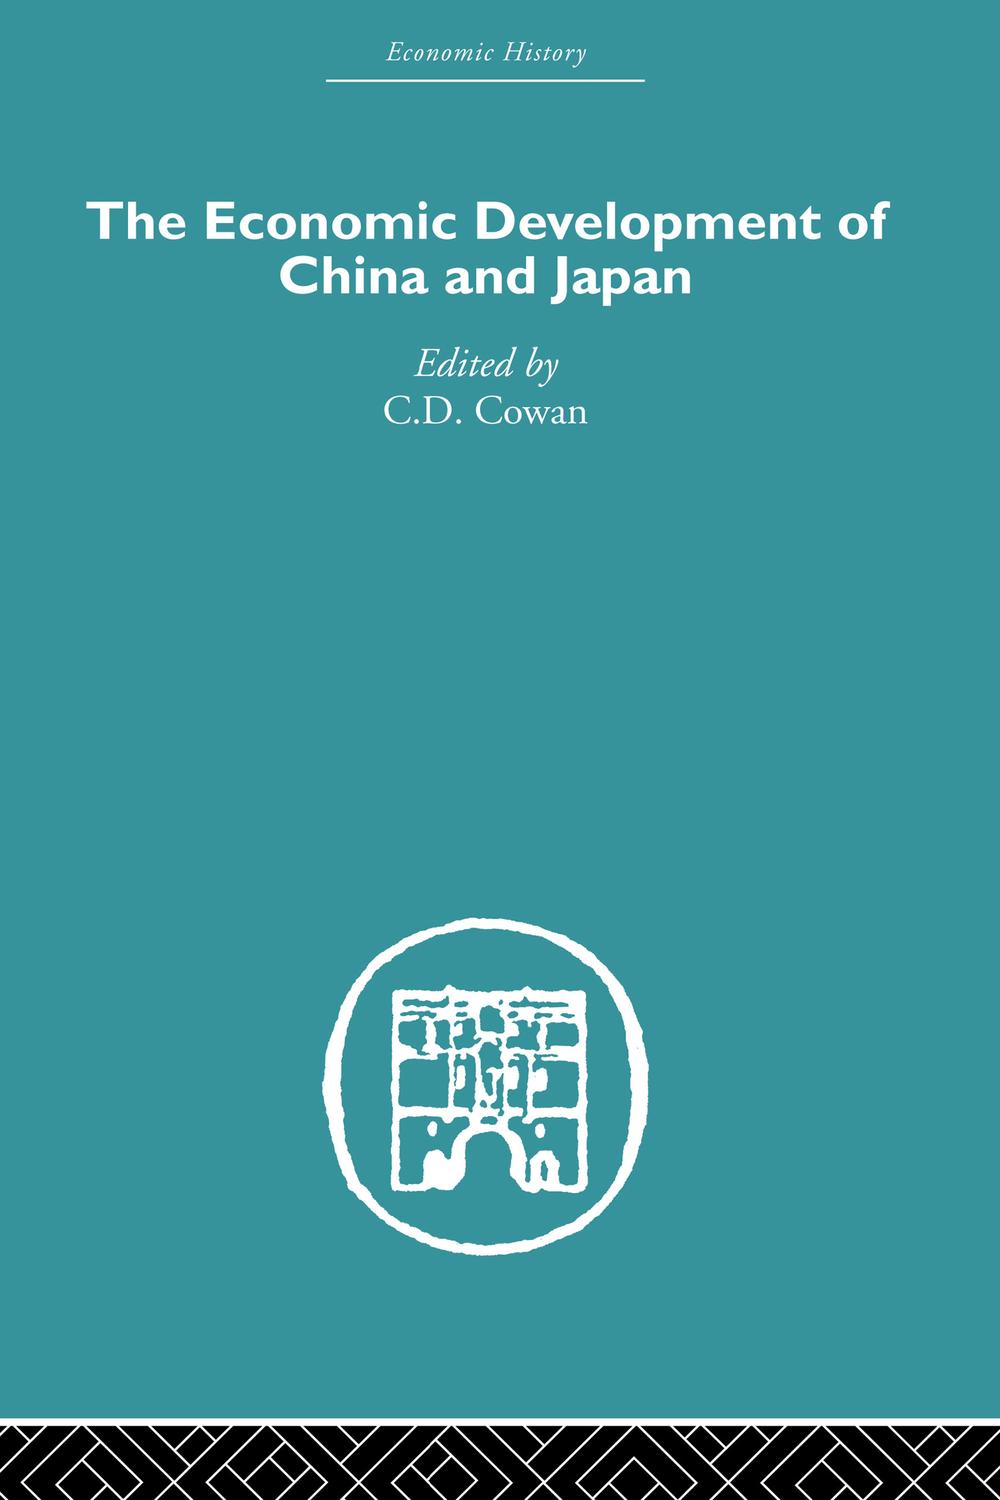 Economic Development of China and Japan - C.D. Cowan